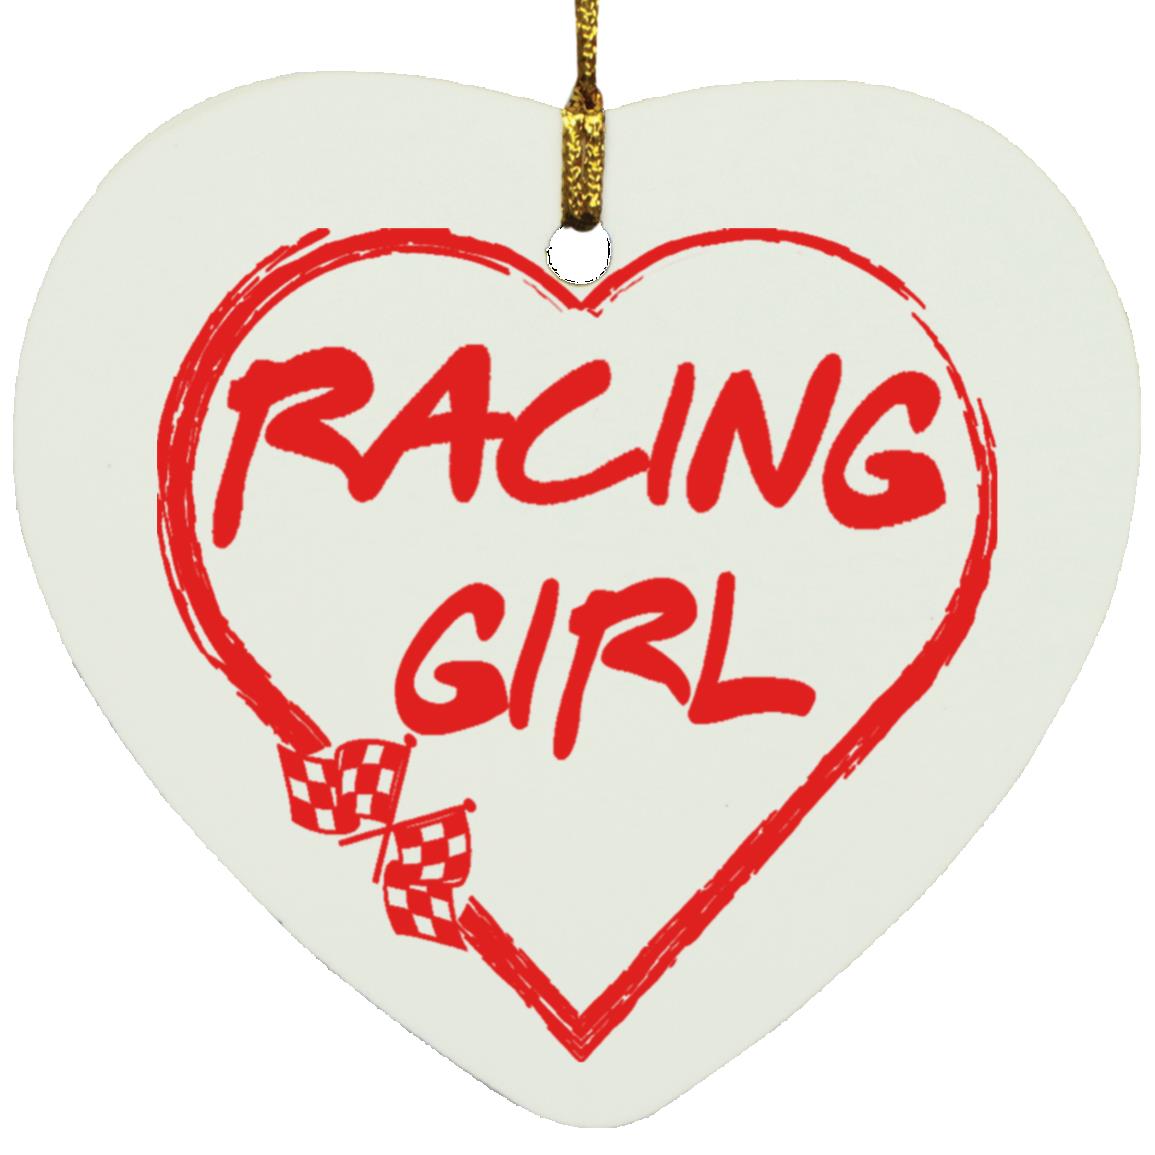 Racing Girl Heart Ornament